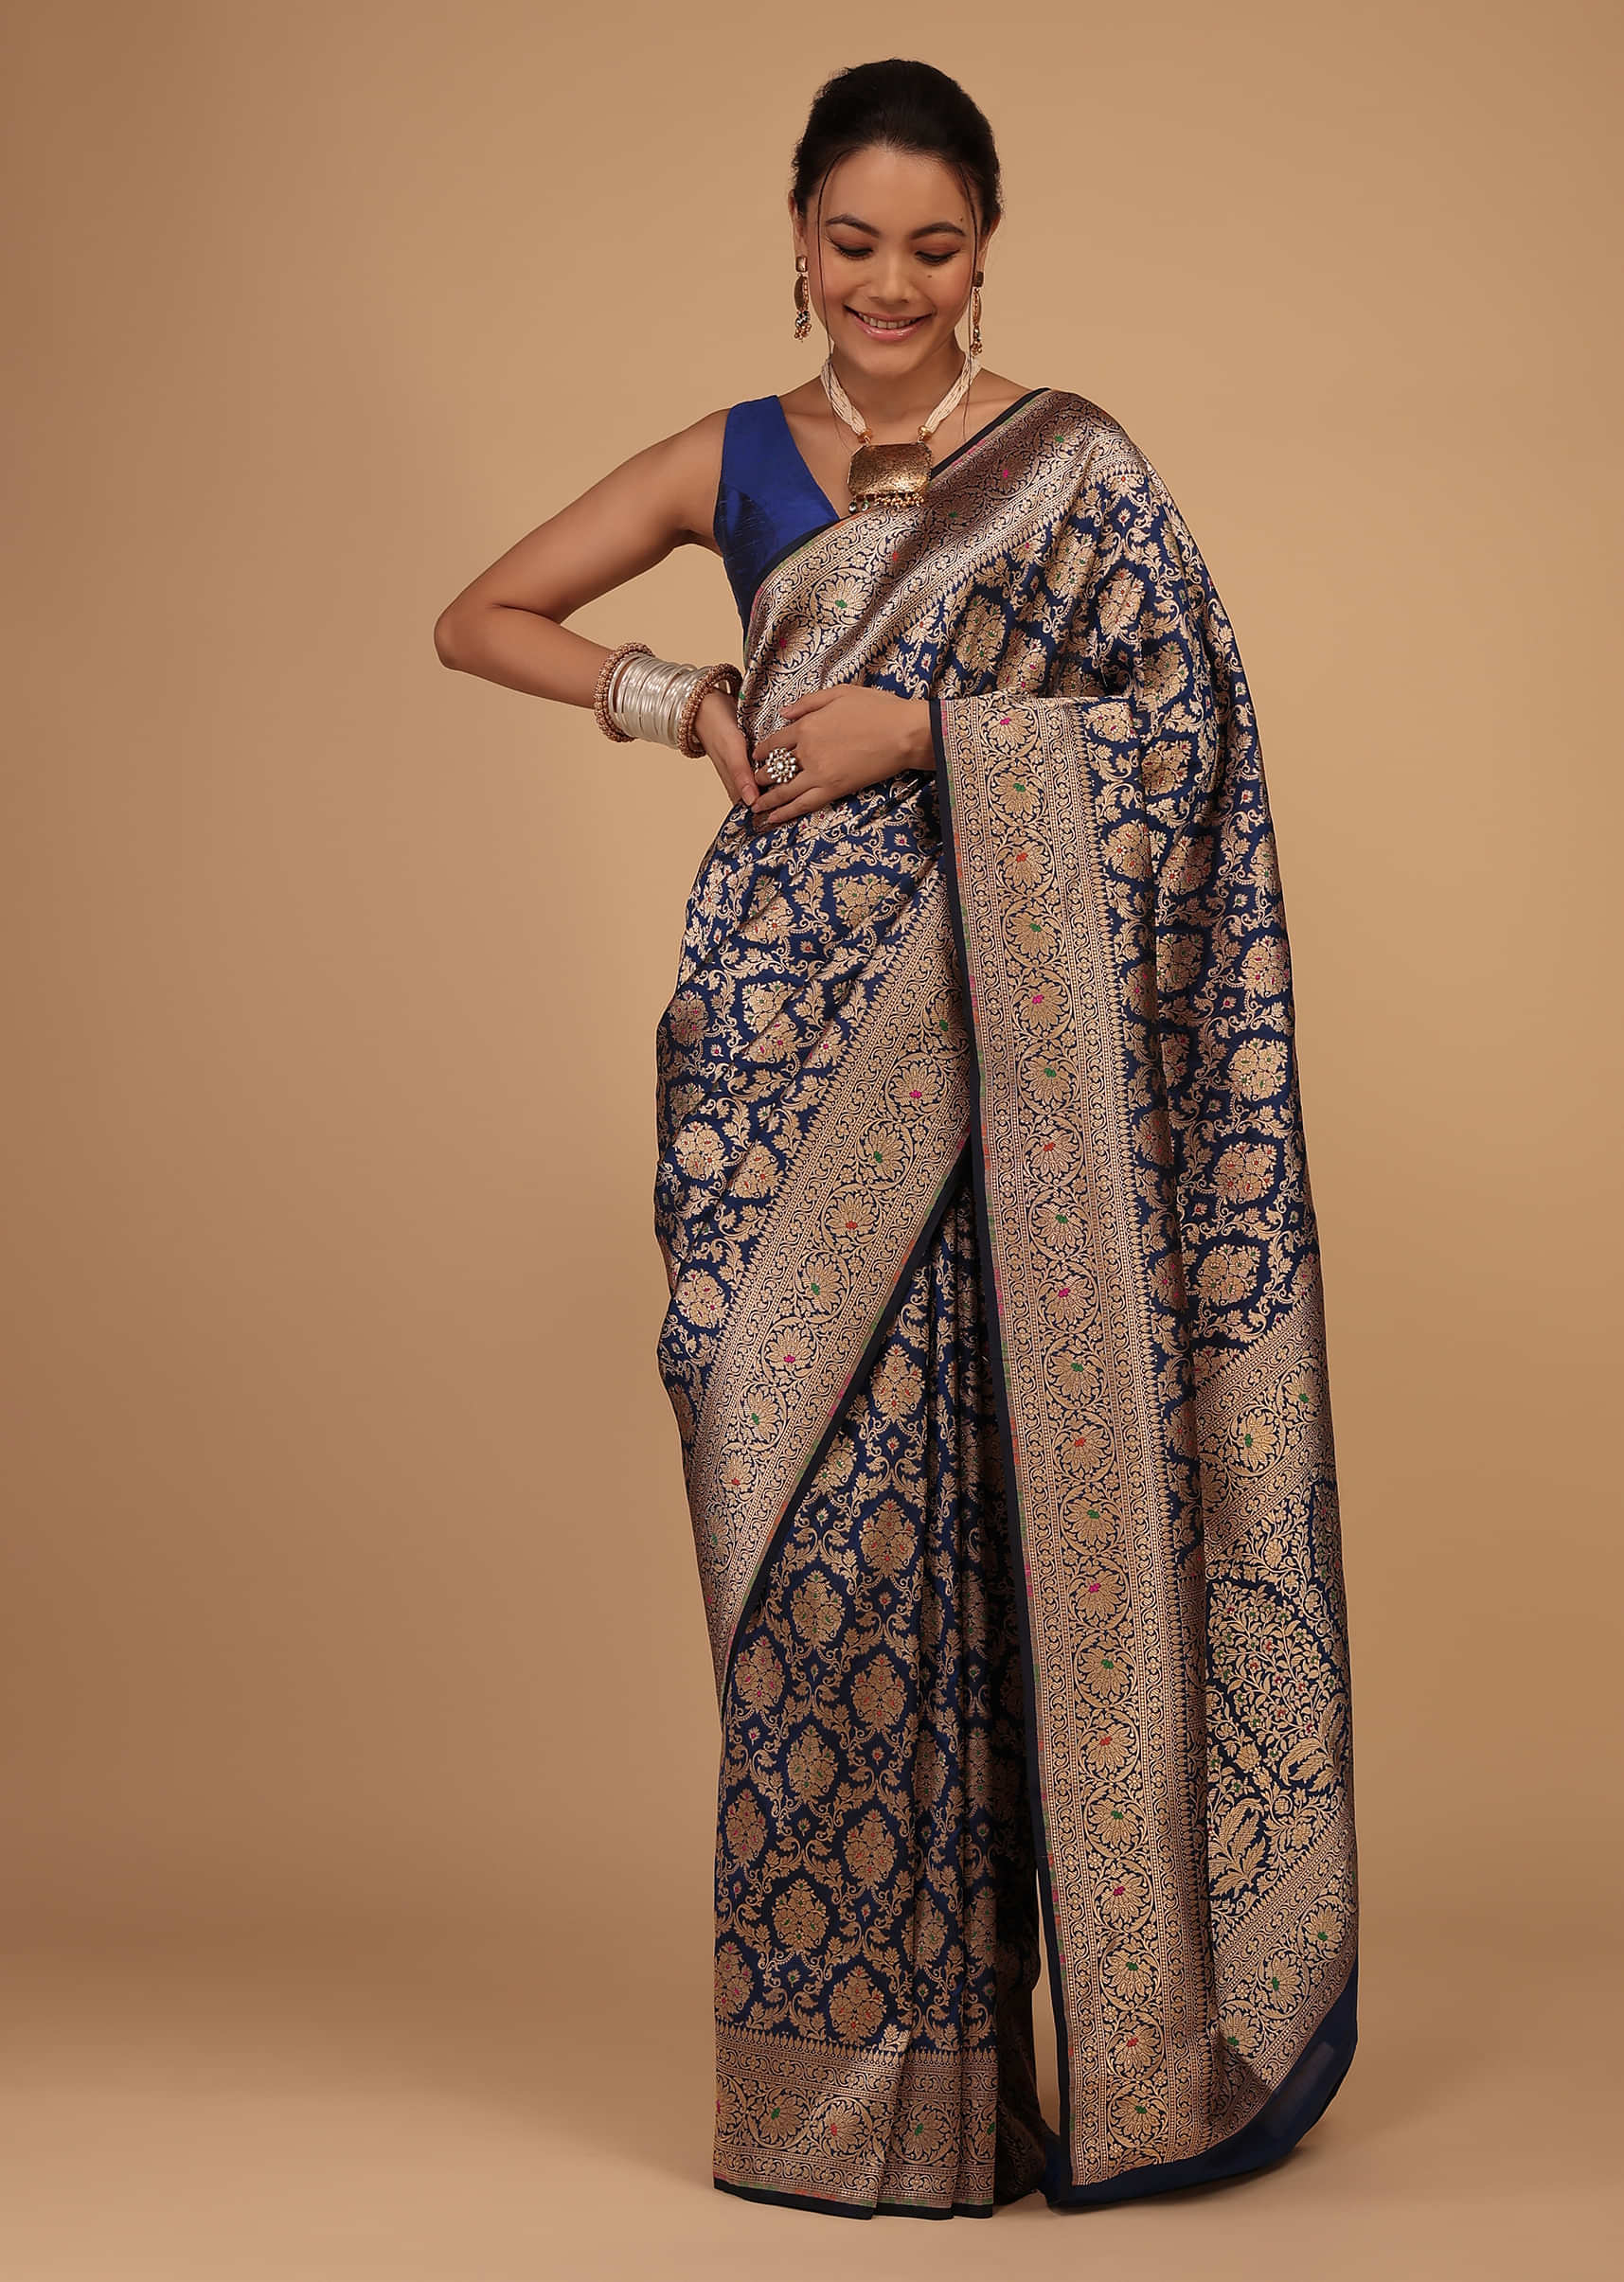 Kalki True Blue Saree In Pure Banarasi Silk With Upada Zari Weave In Floral Jaal Work